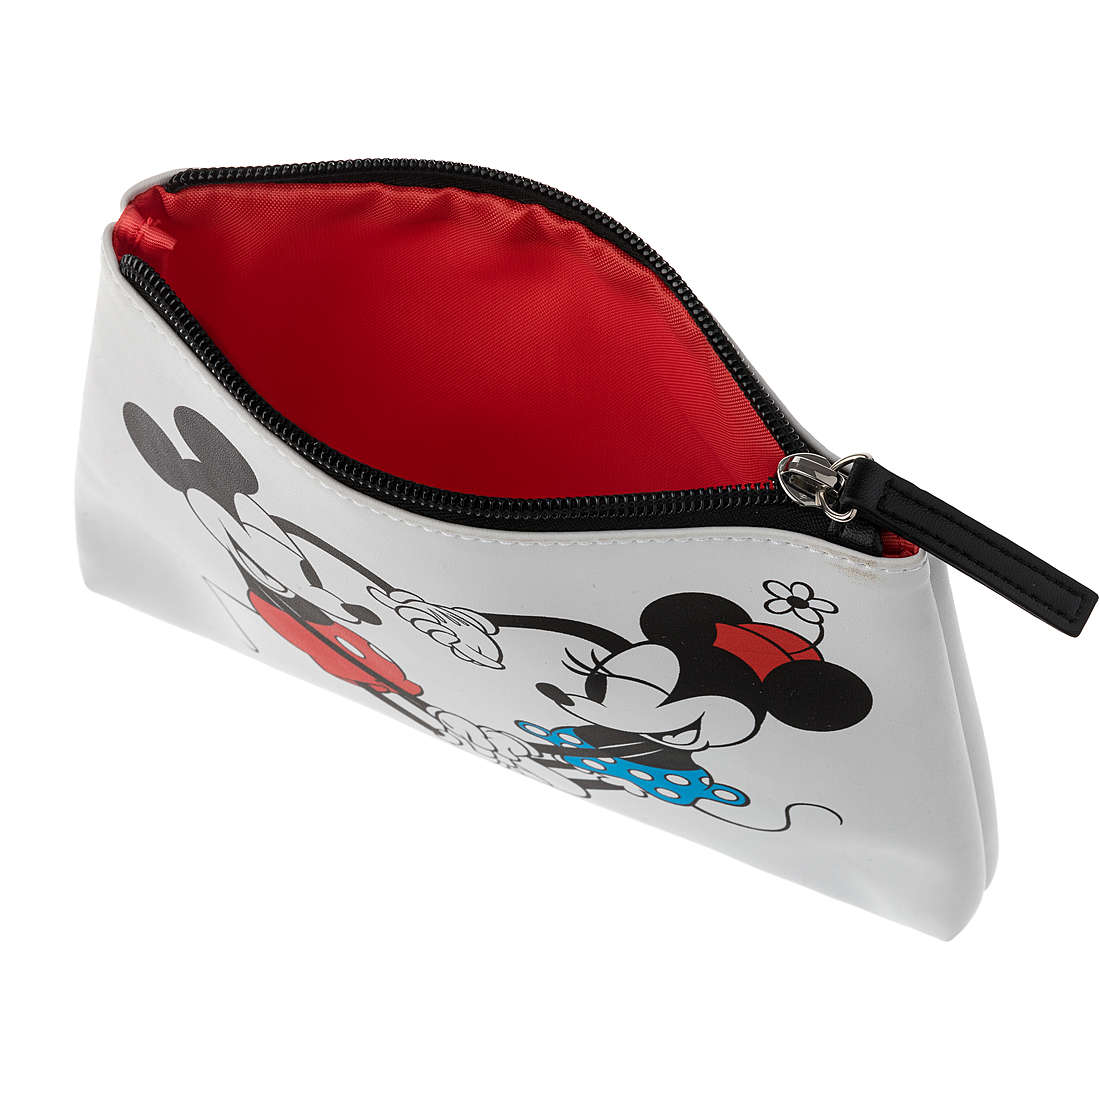 Borsa Disney Mickey Mouse Fantasia VB700244L.CS